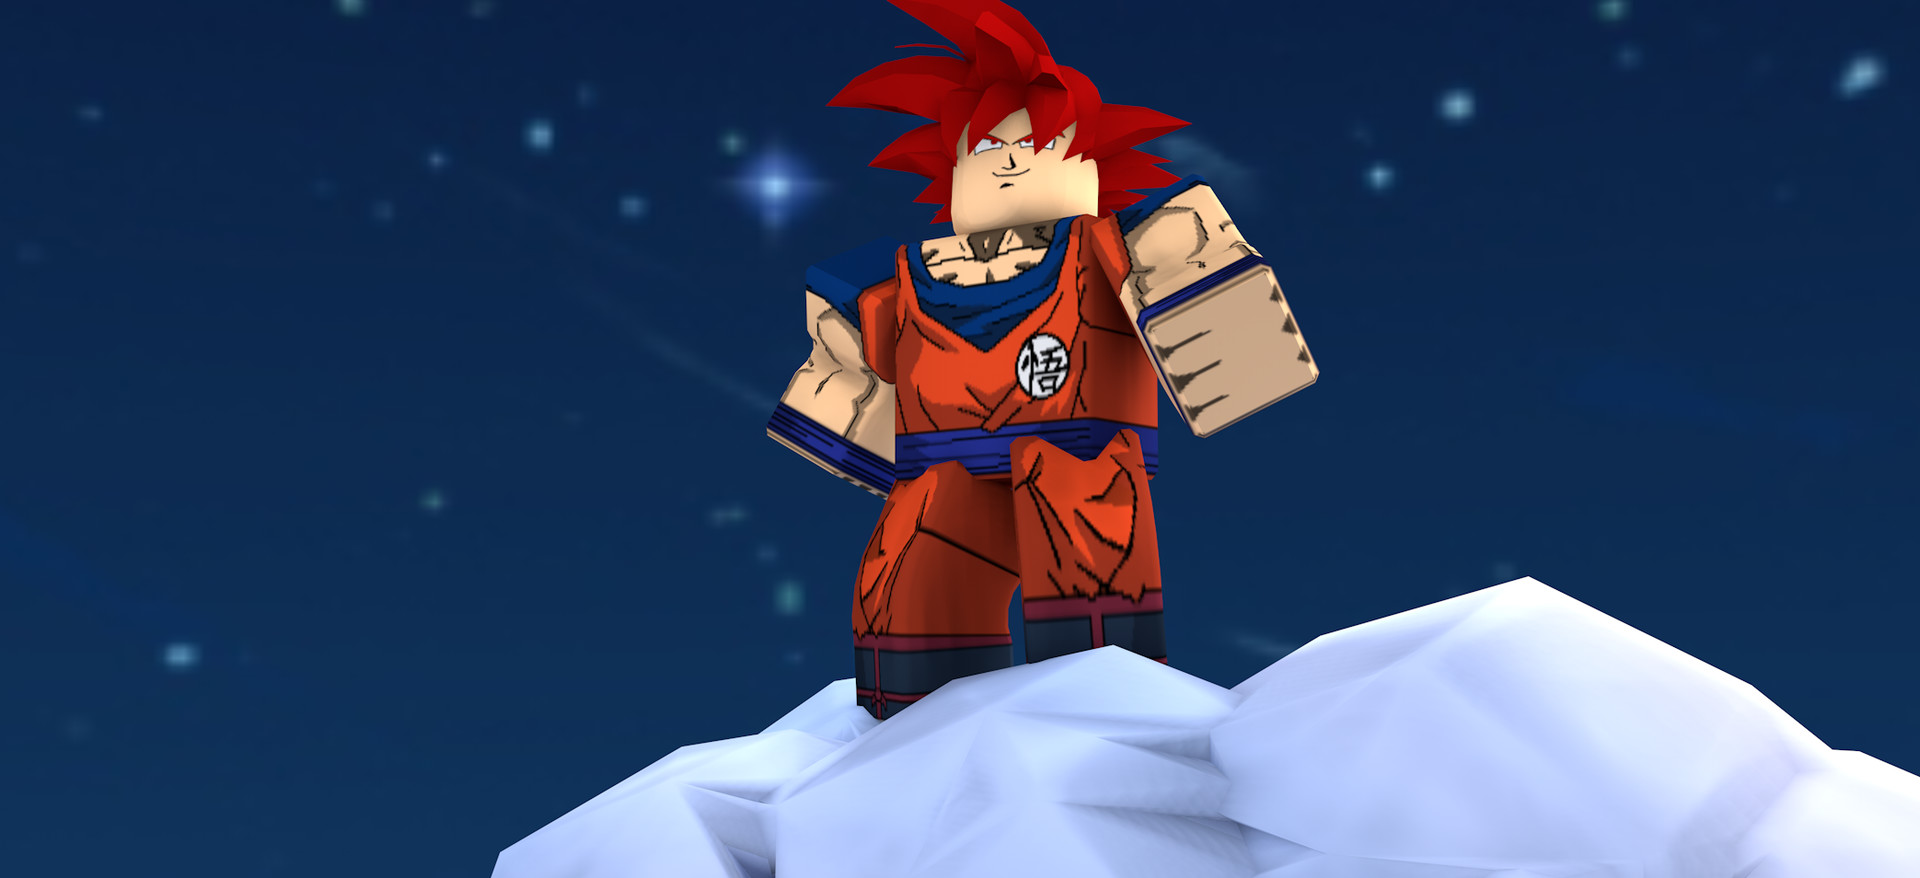 Roblox Goku Art